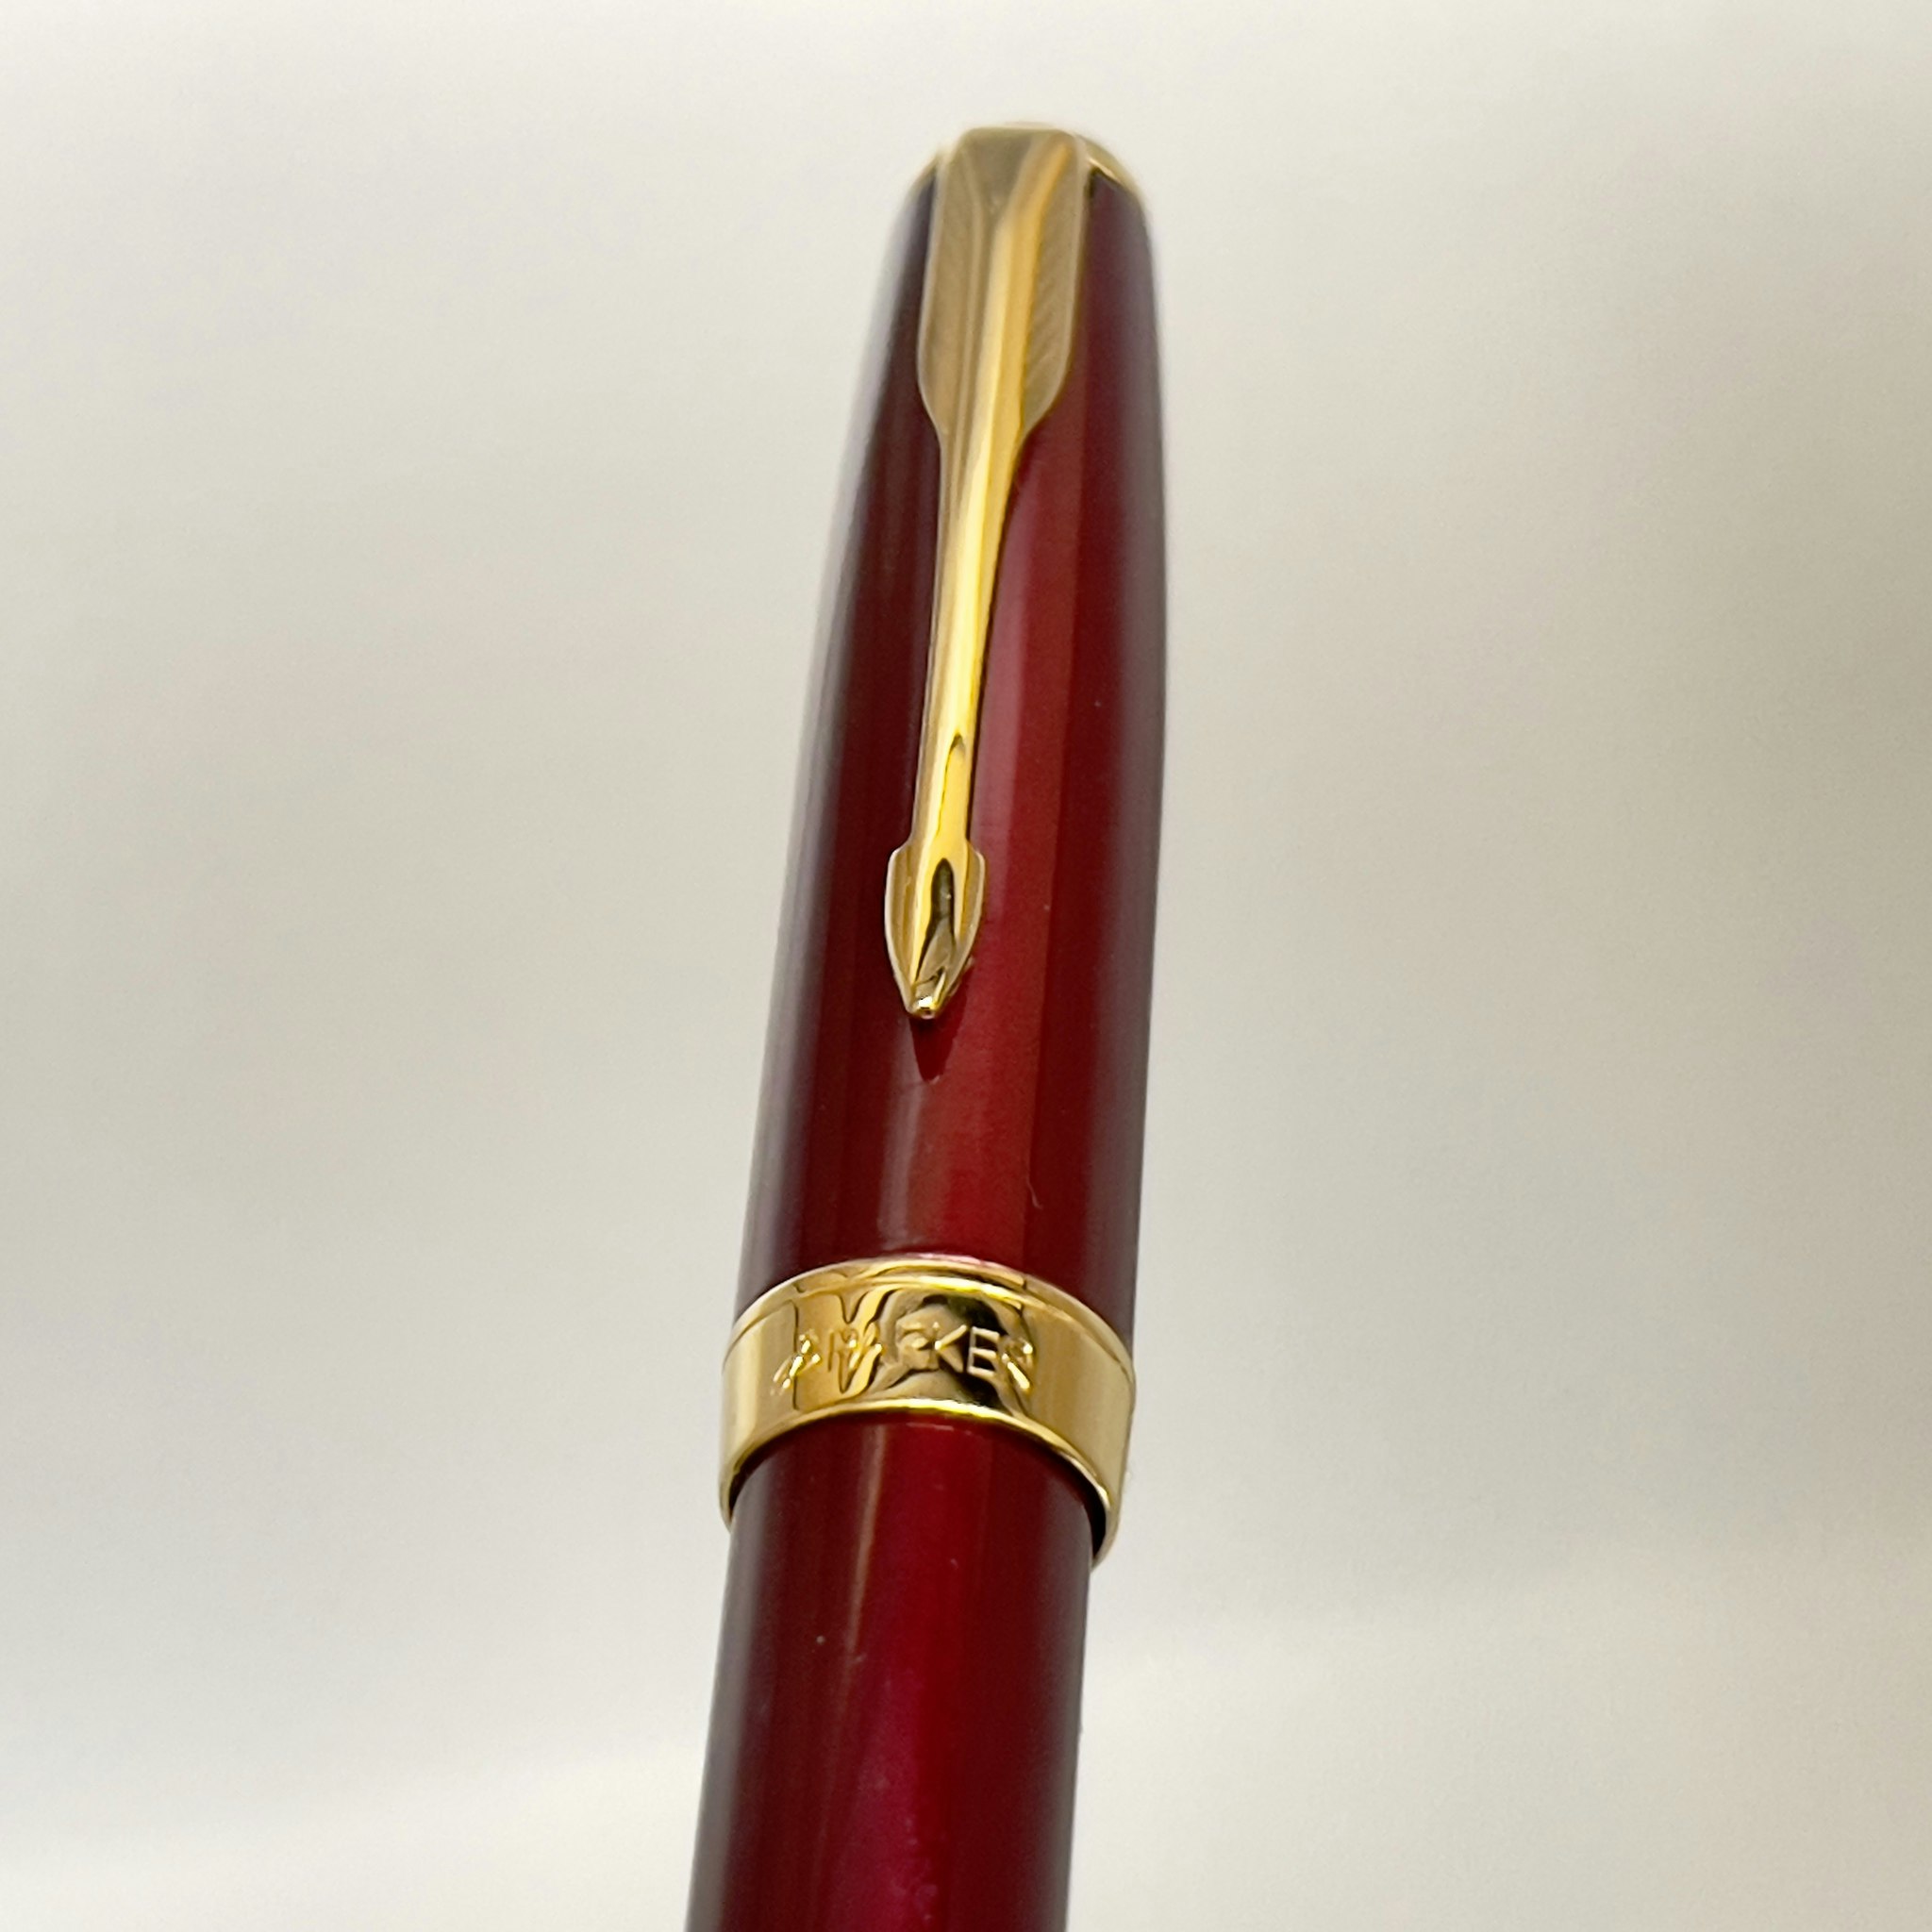 Parker Sonett Ruby red fountain pen with 18k gold details